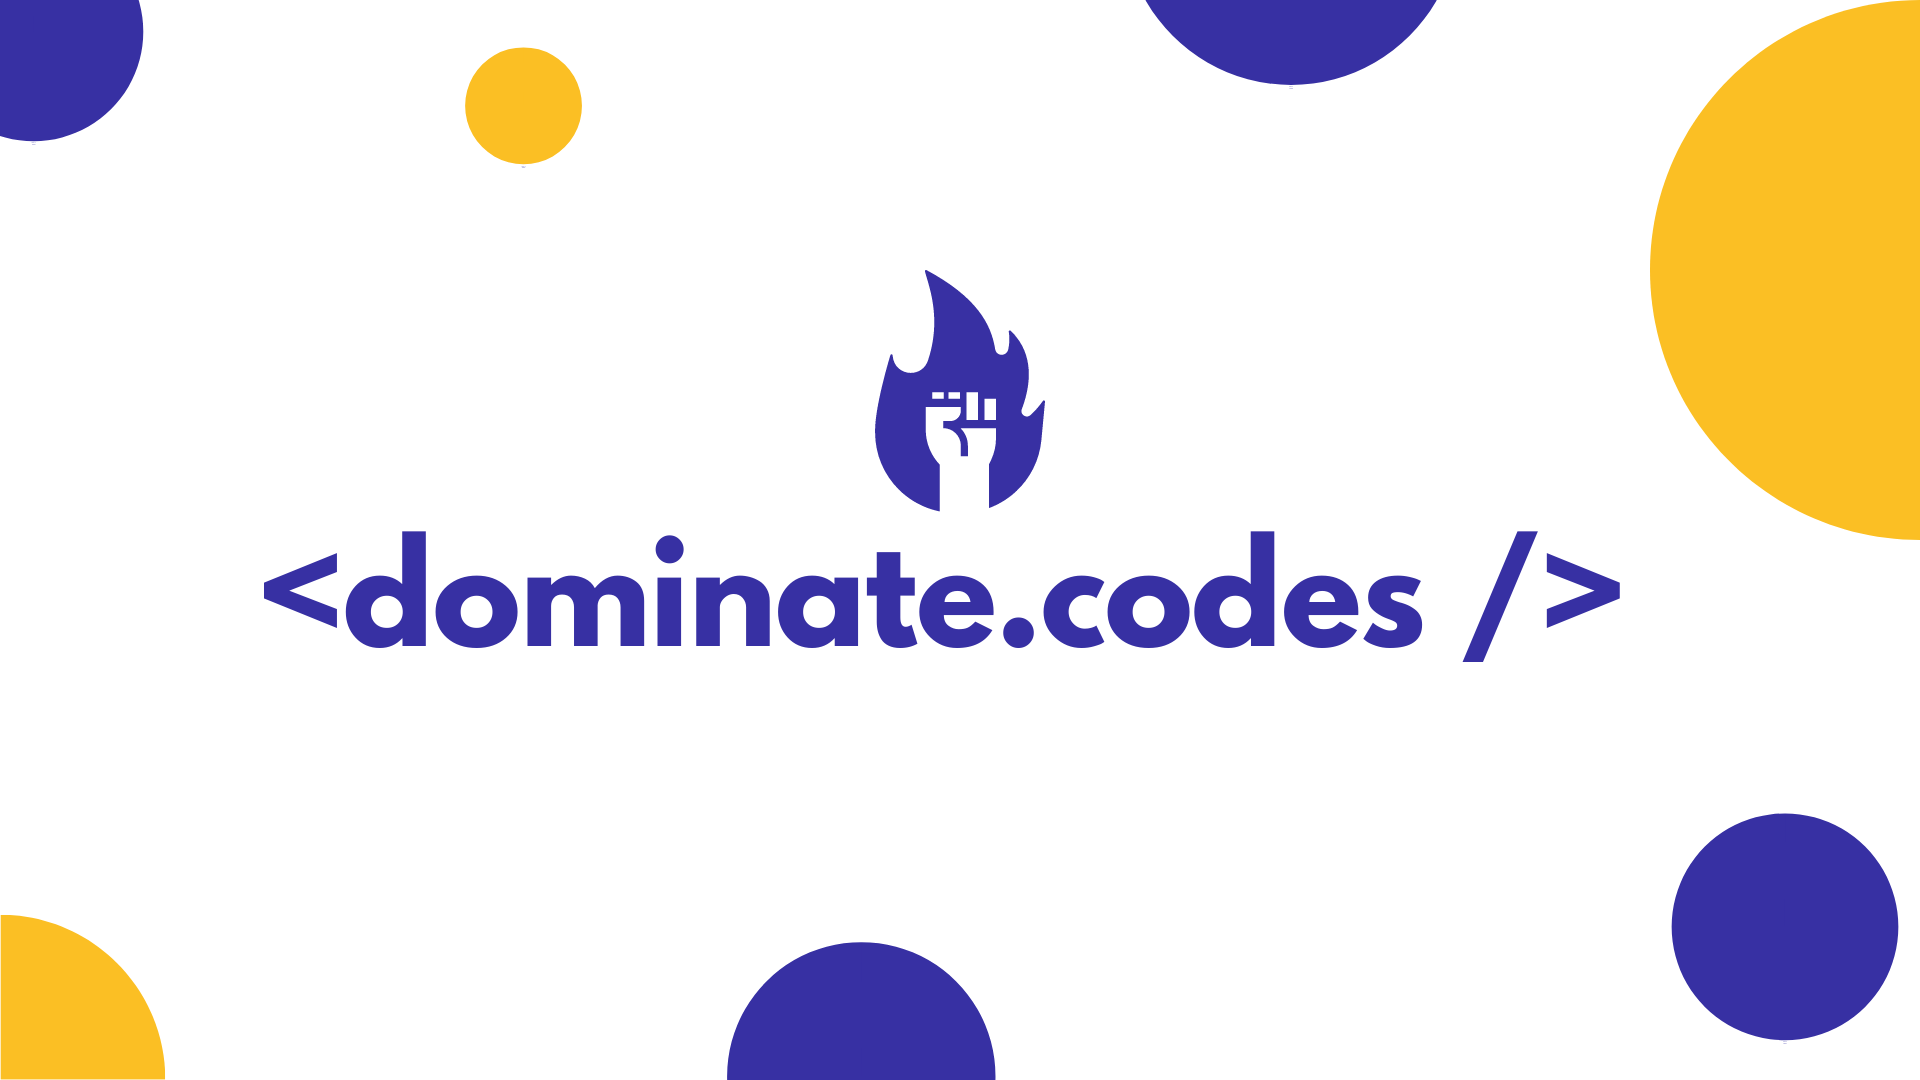 Dominate.codes blog post hero